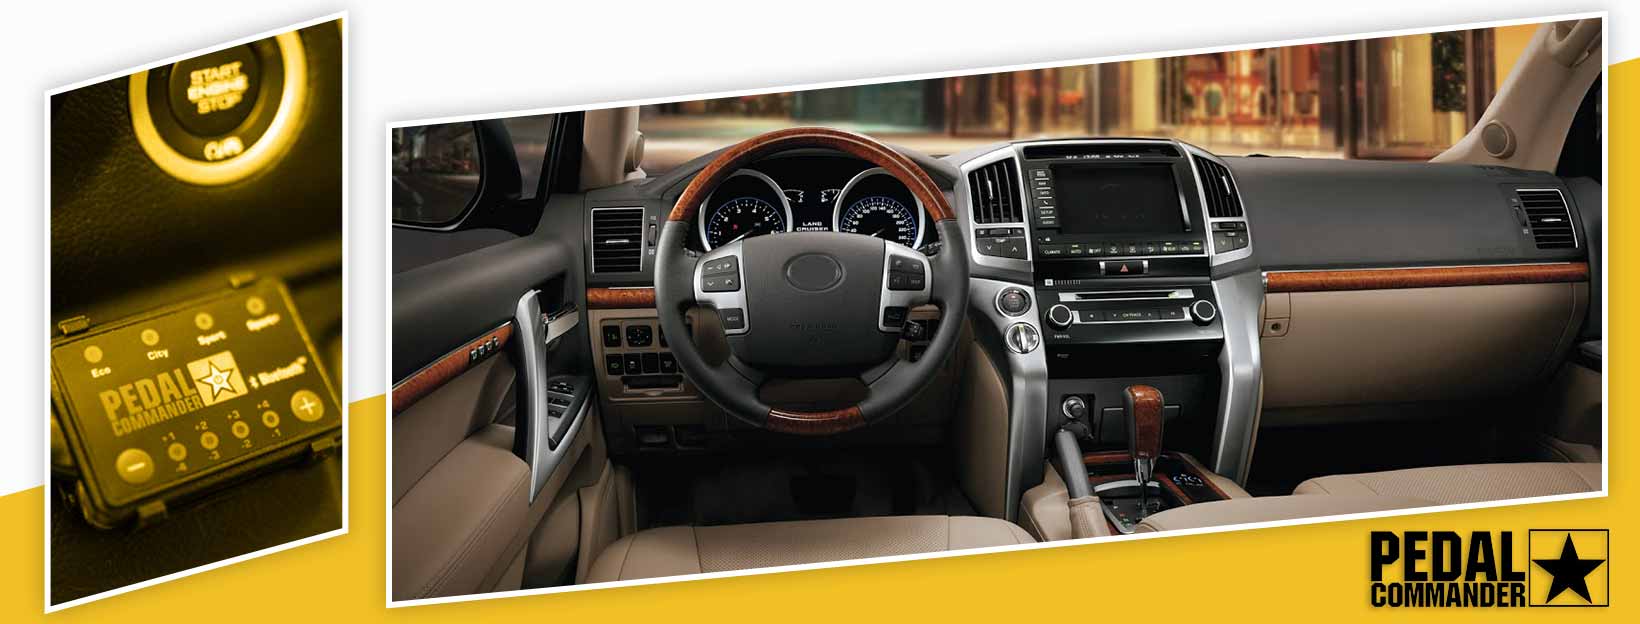 Pedal Commander for Toyota Land Cruiser - interior